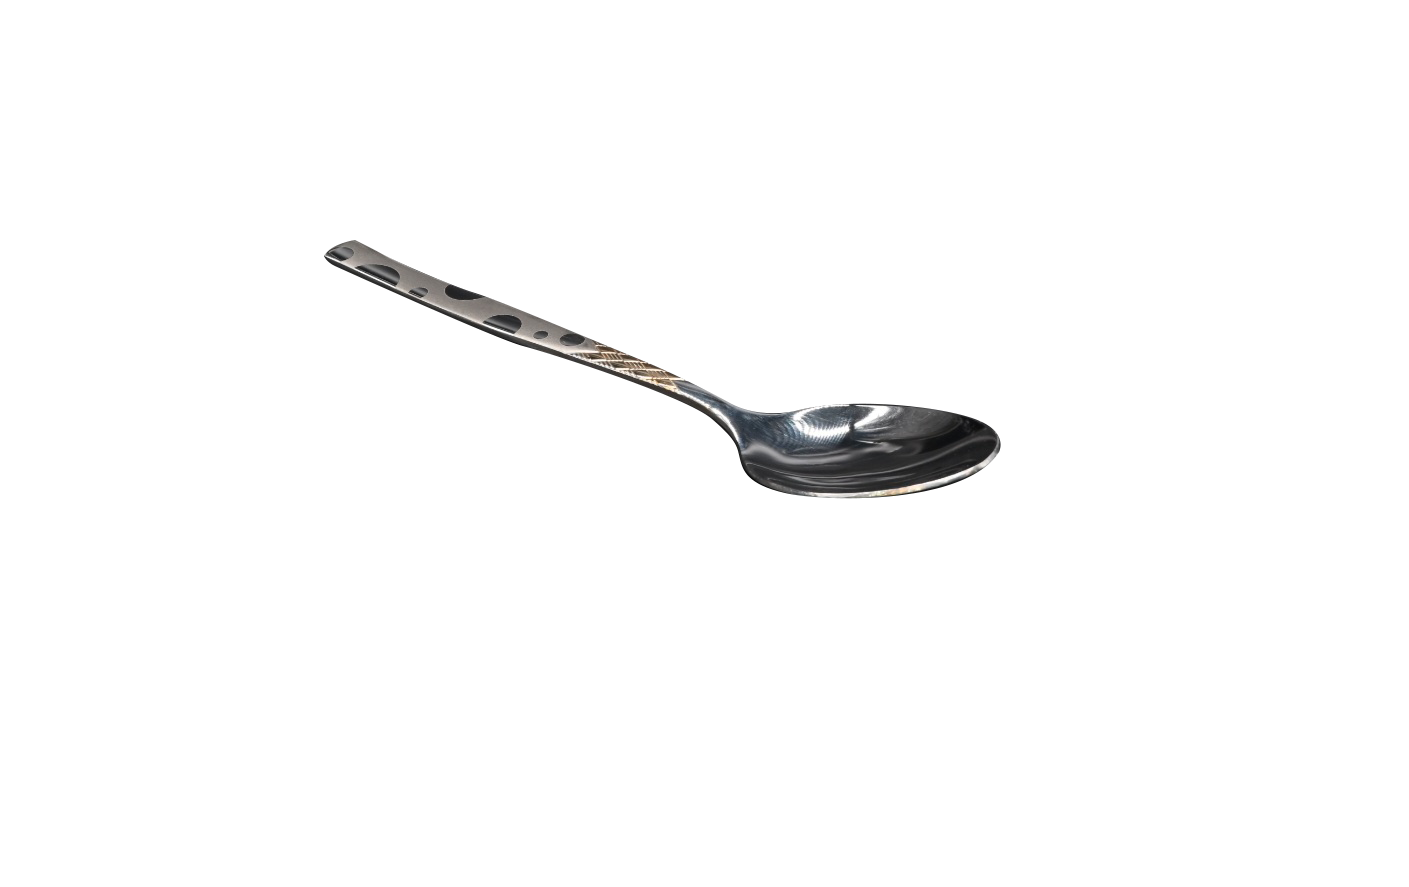 Sleek Silver Spoon Set